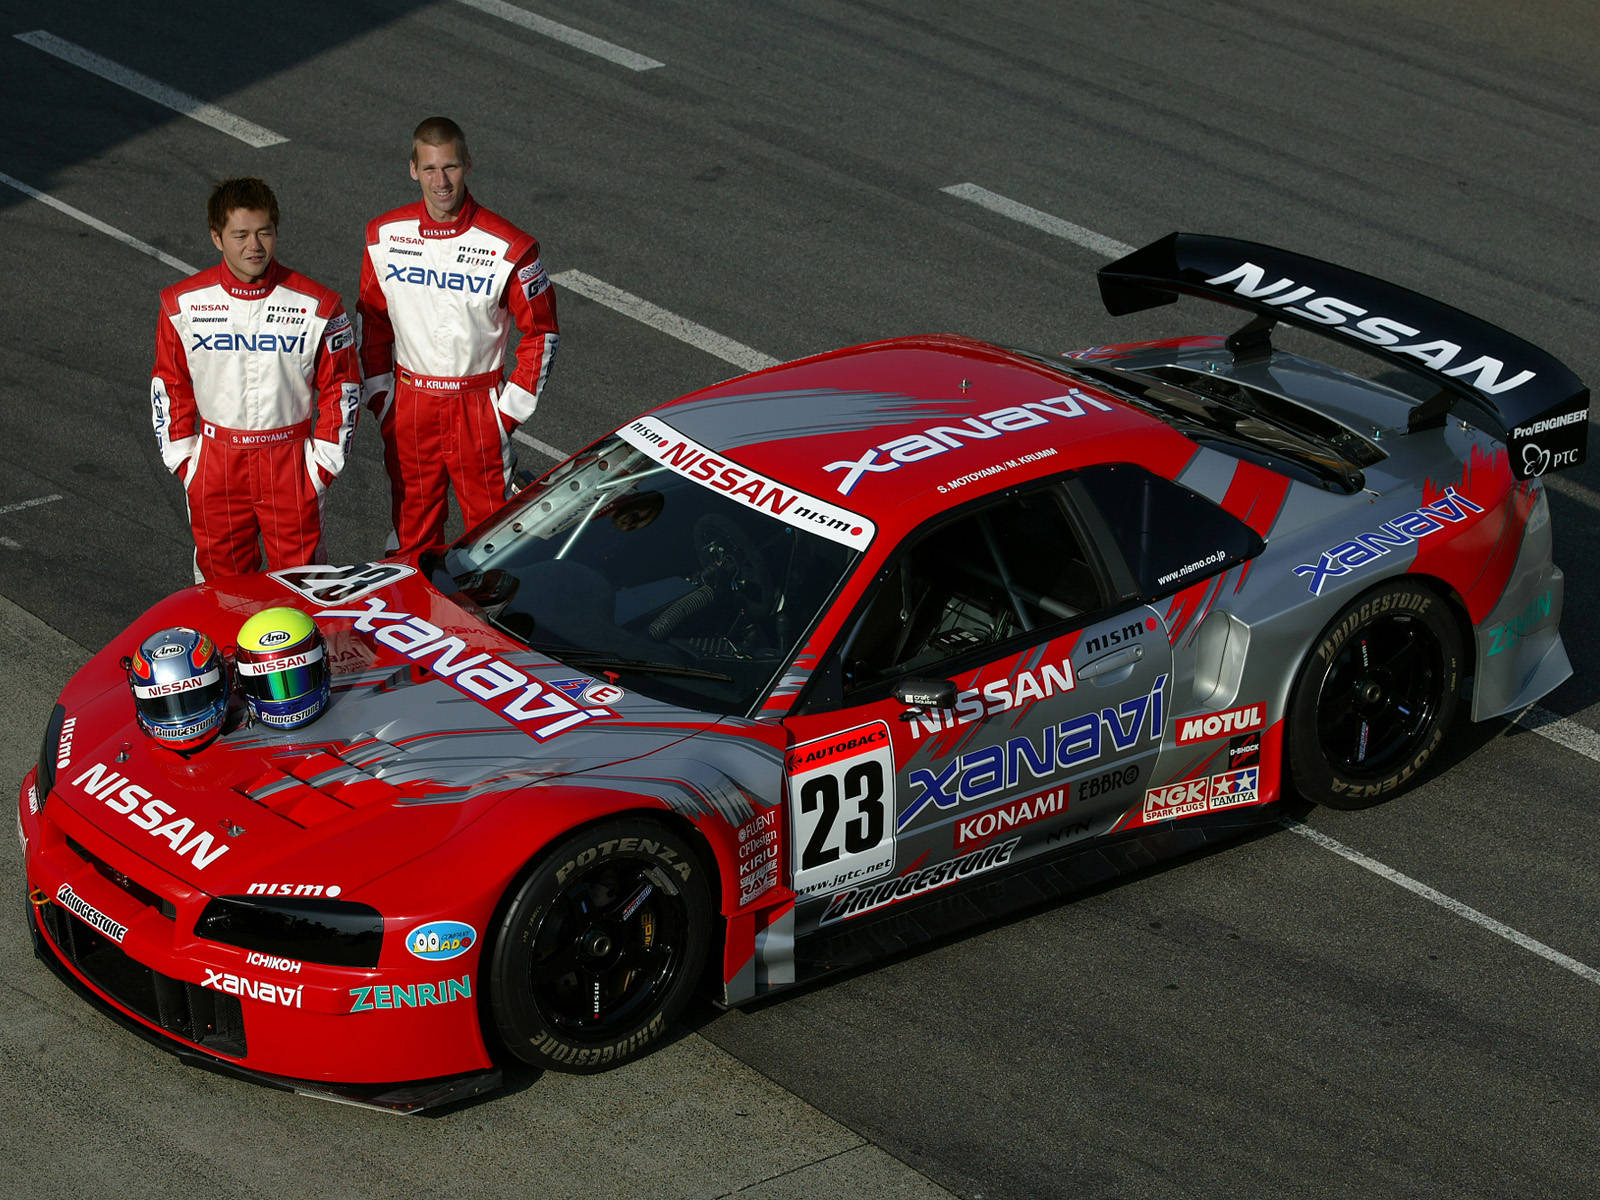 Captivating Shot Of Skyline Car In 2003 Championship Wallpaper